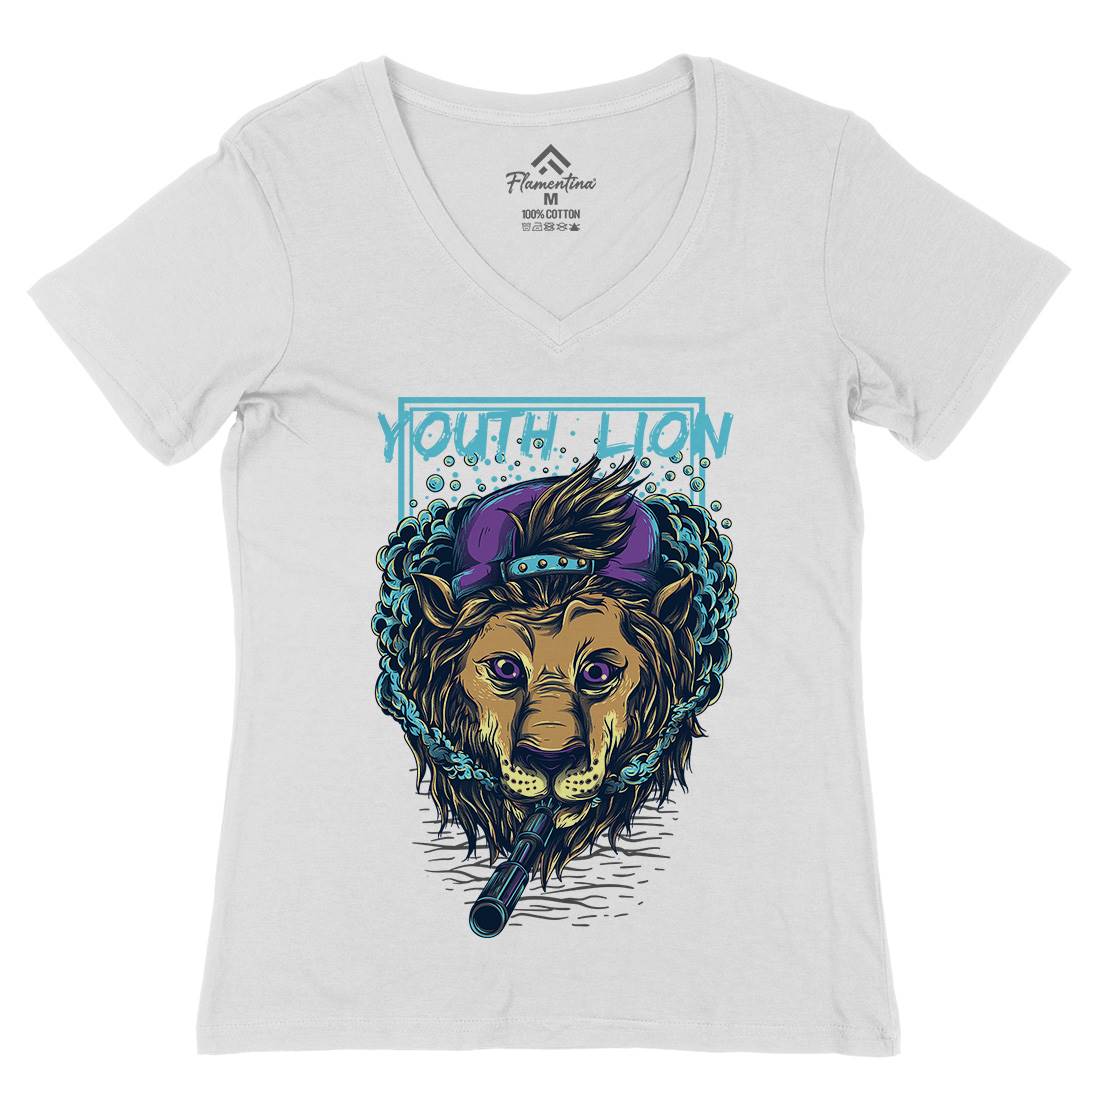 Youth Lion Womens Organic V-Neck T-Shirt Animals D893